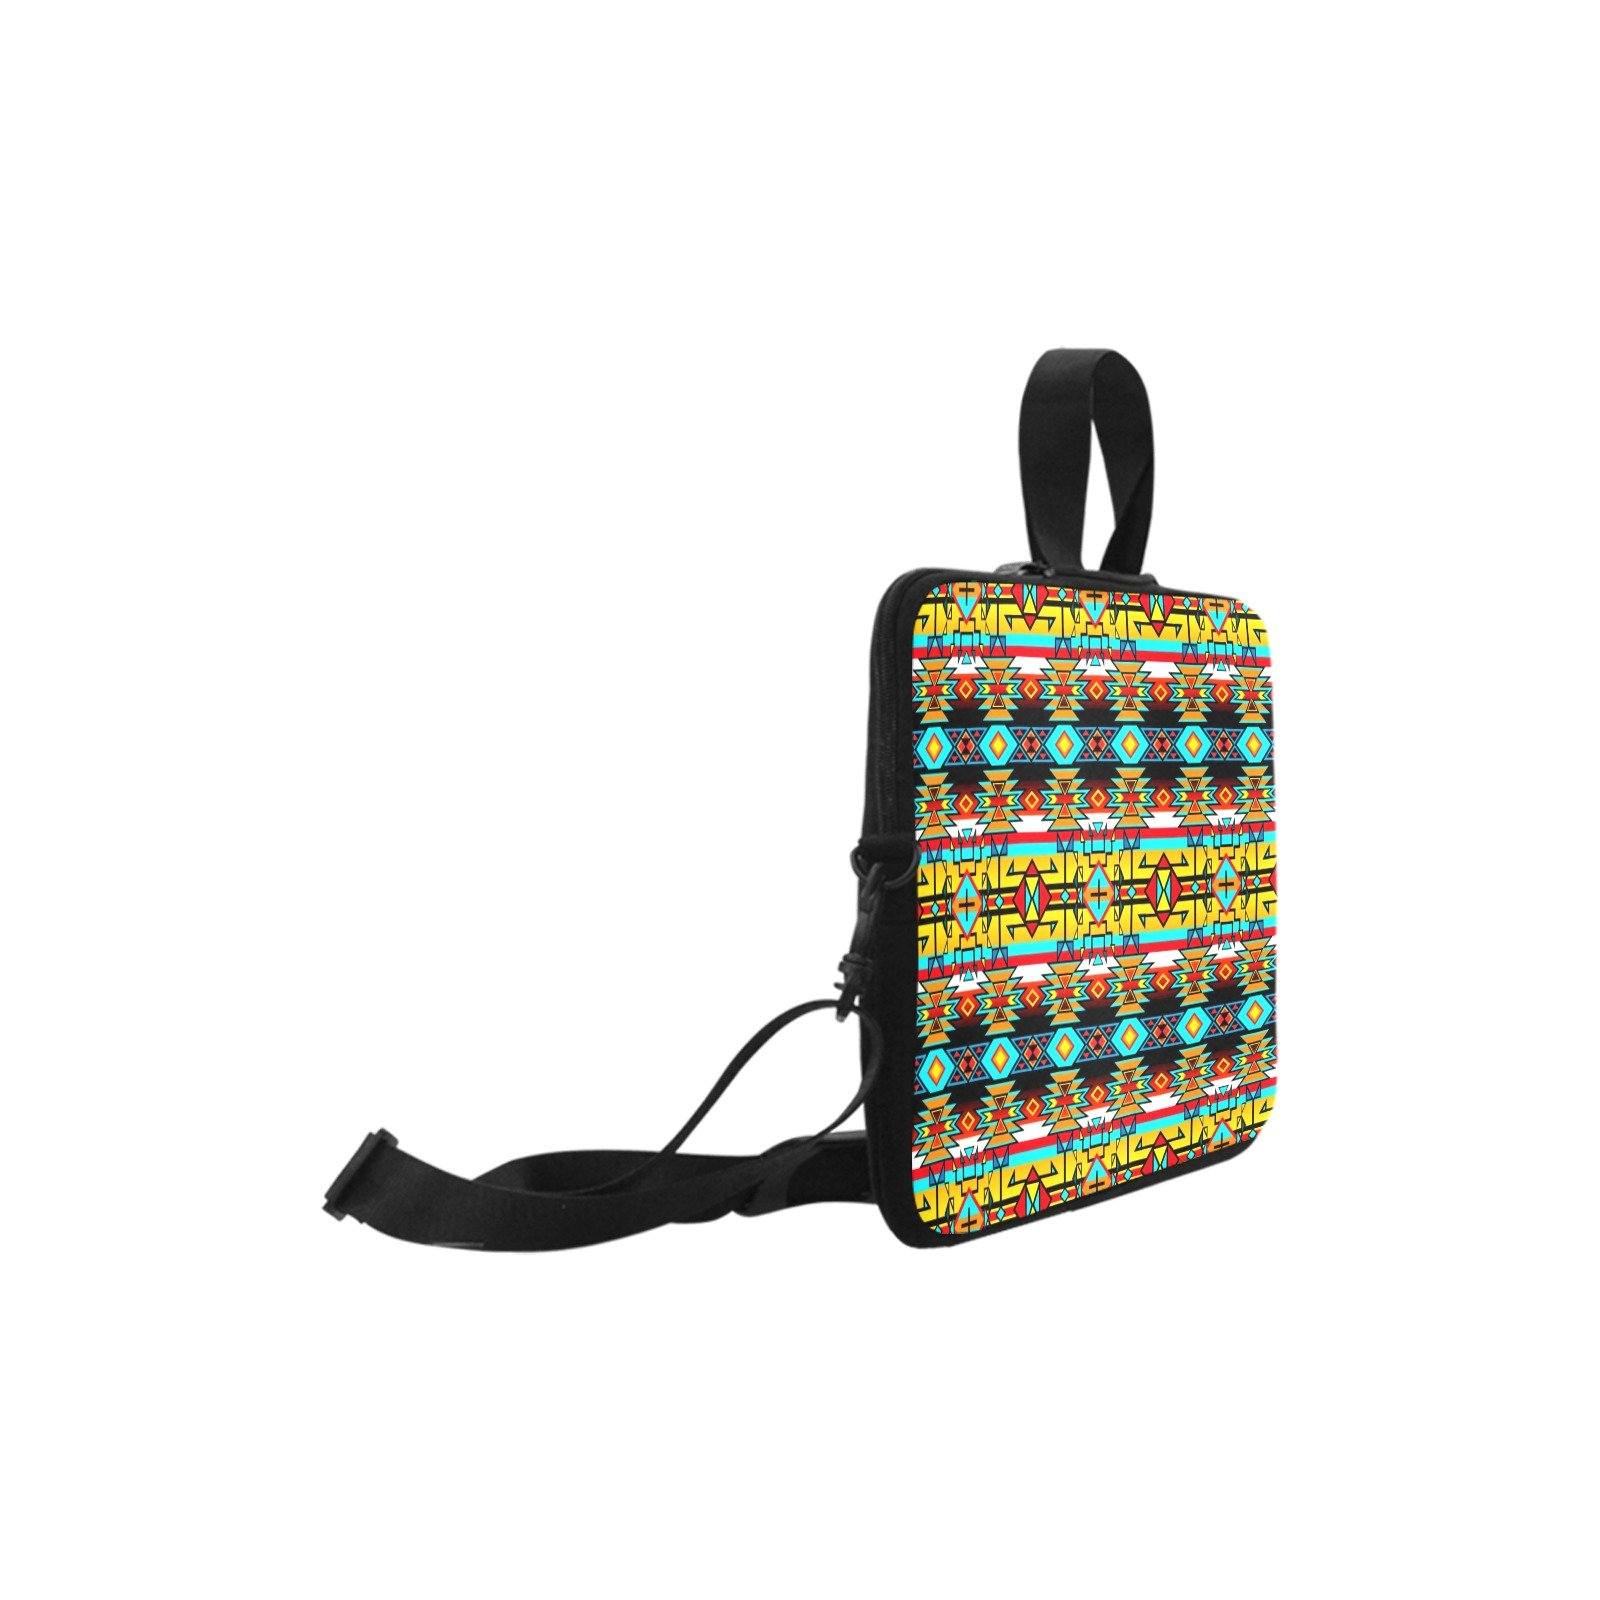 Force of Nature Twister Laptop Handbags 11" bag e-joyer 